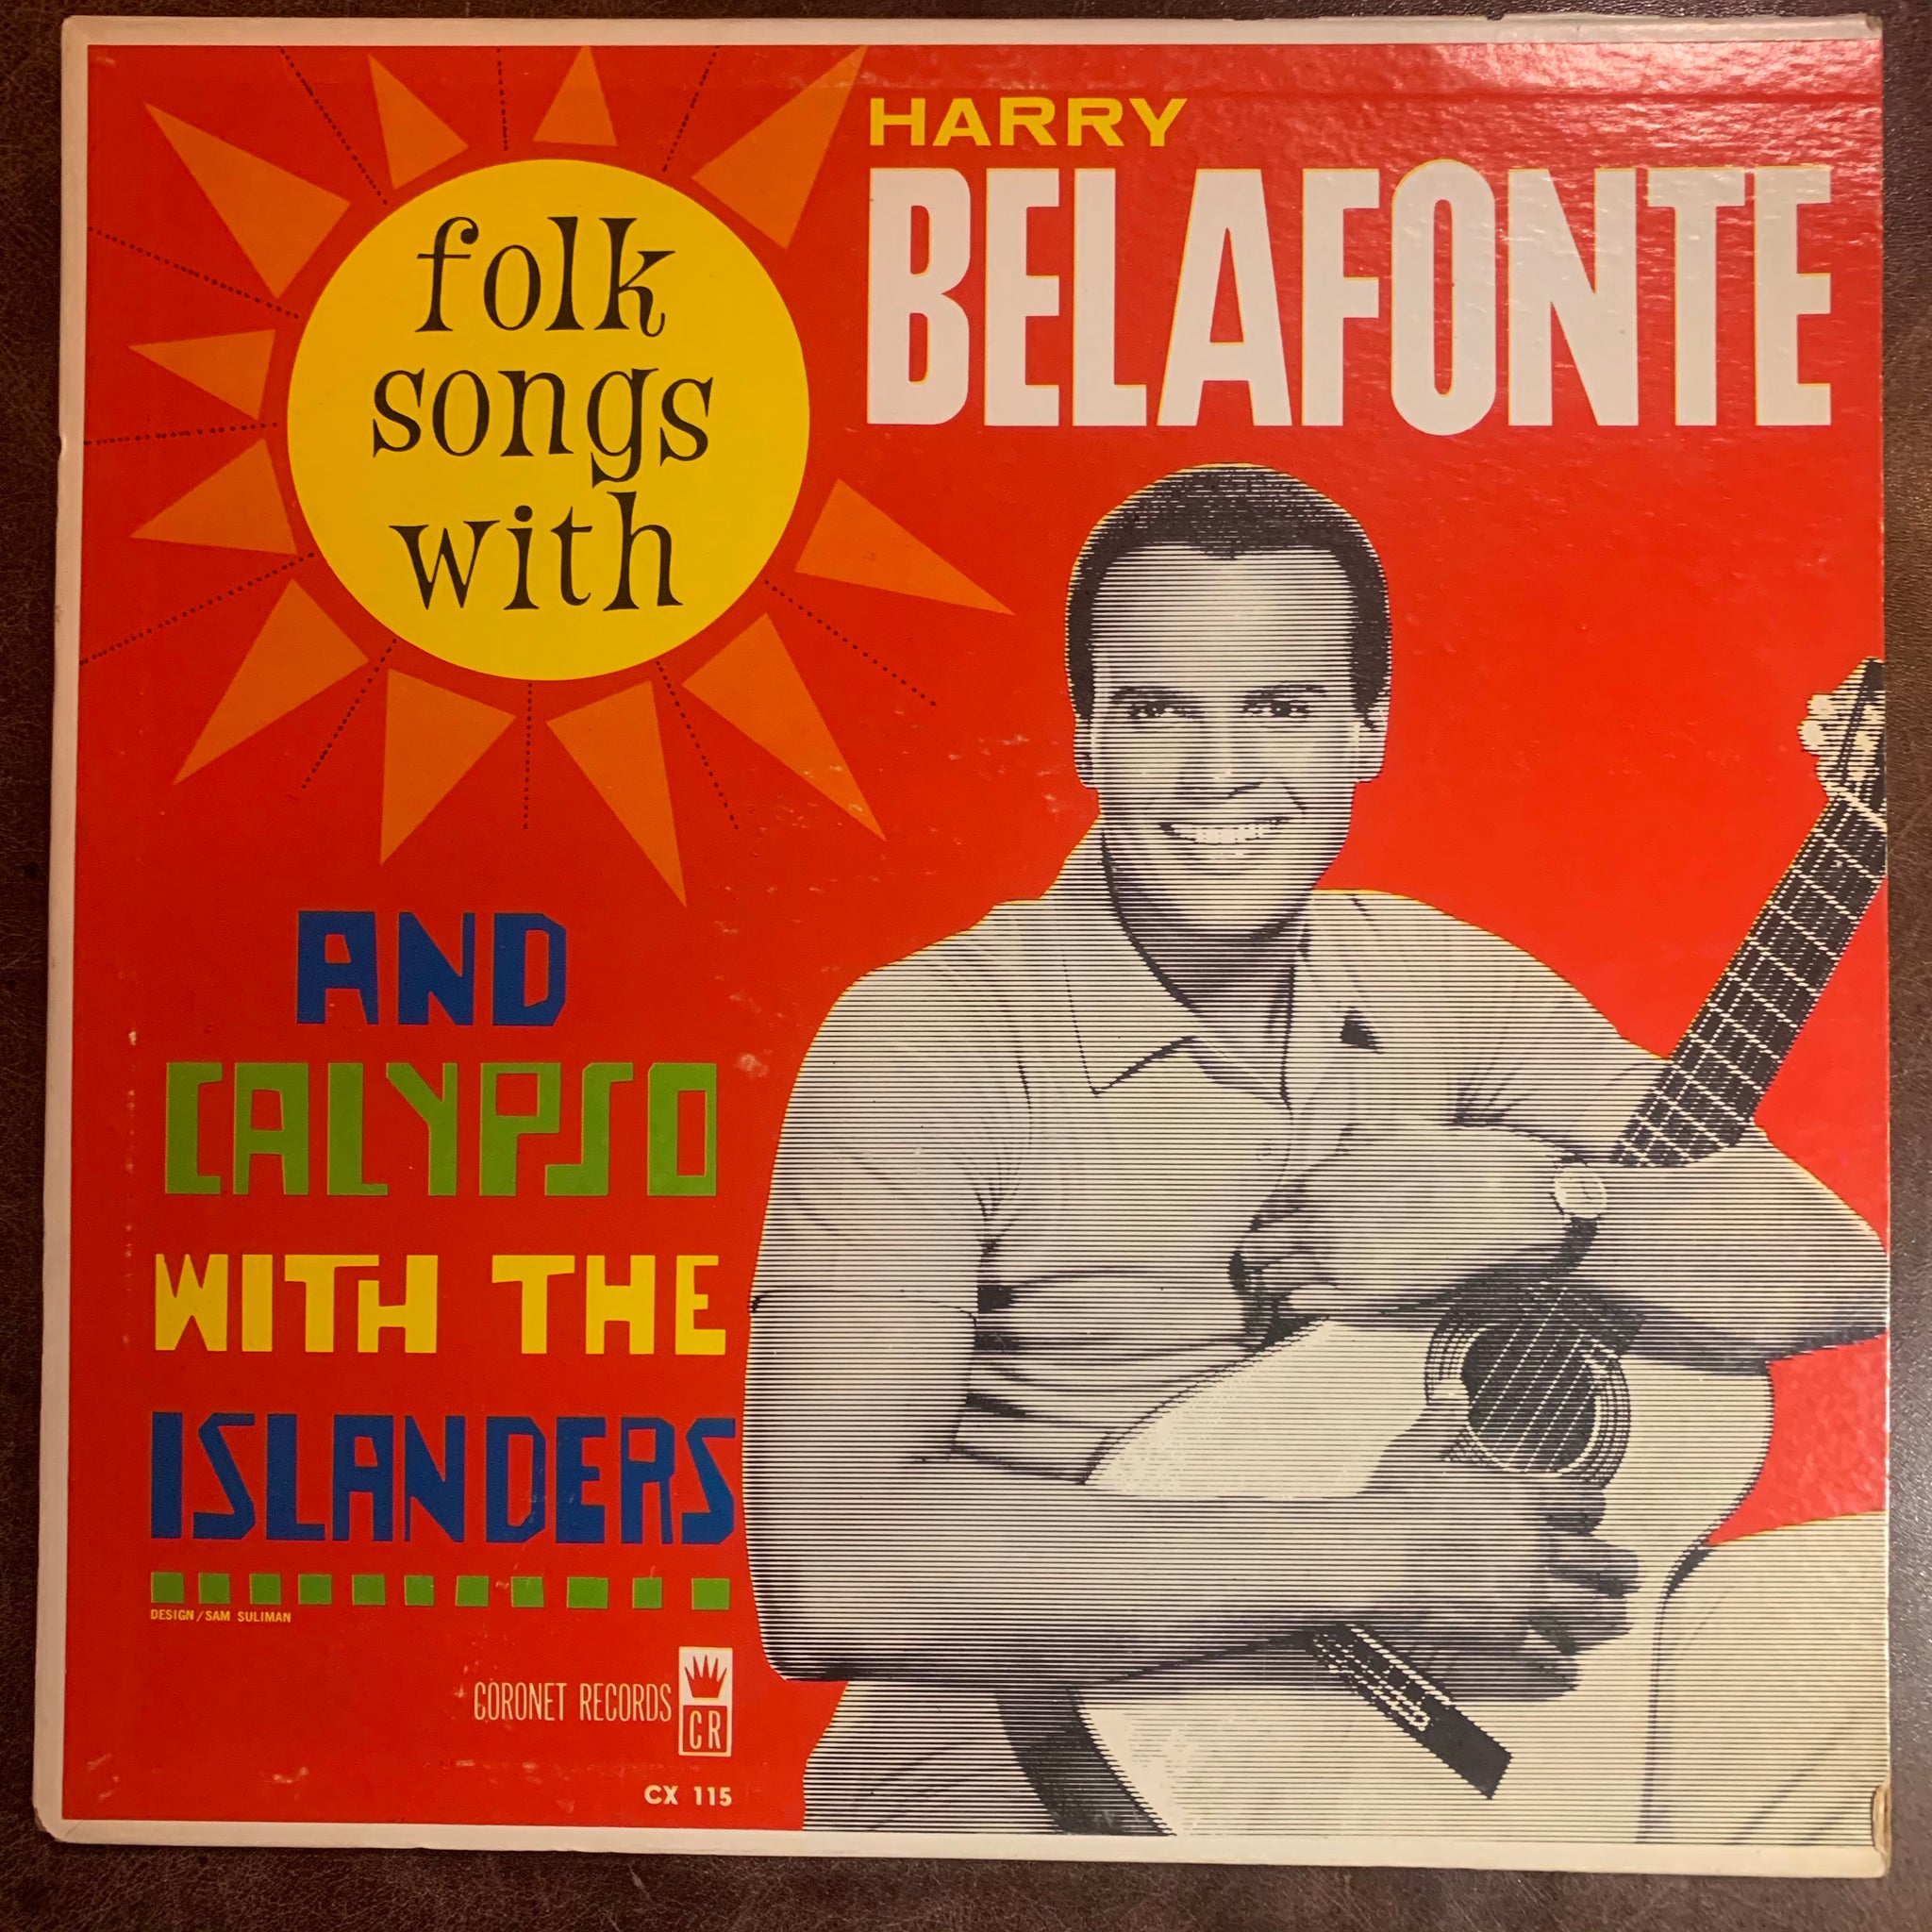 Harry Belafonte - Folk Songs and Calypso with the Islanders